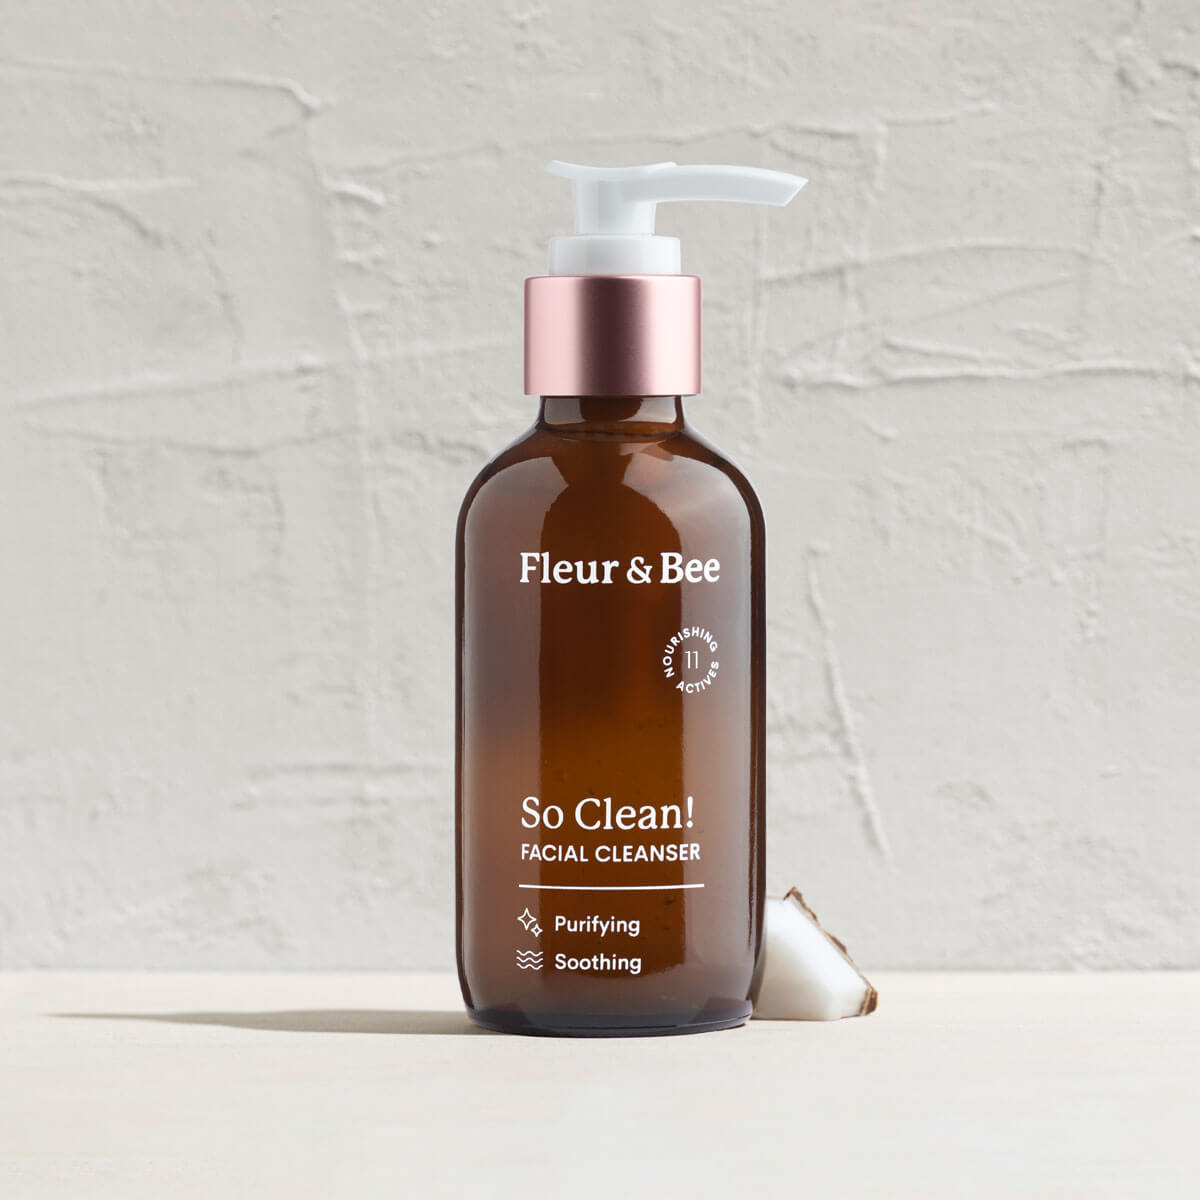 So Clean! a natural facial cleanser by Fleur & Bee